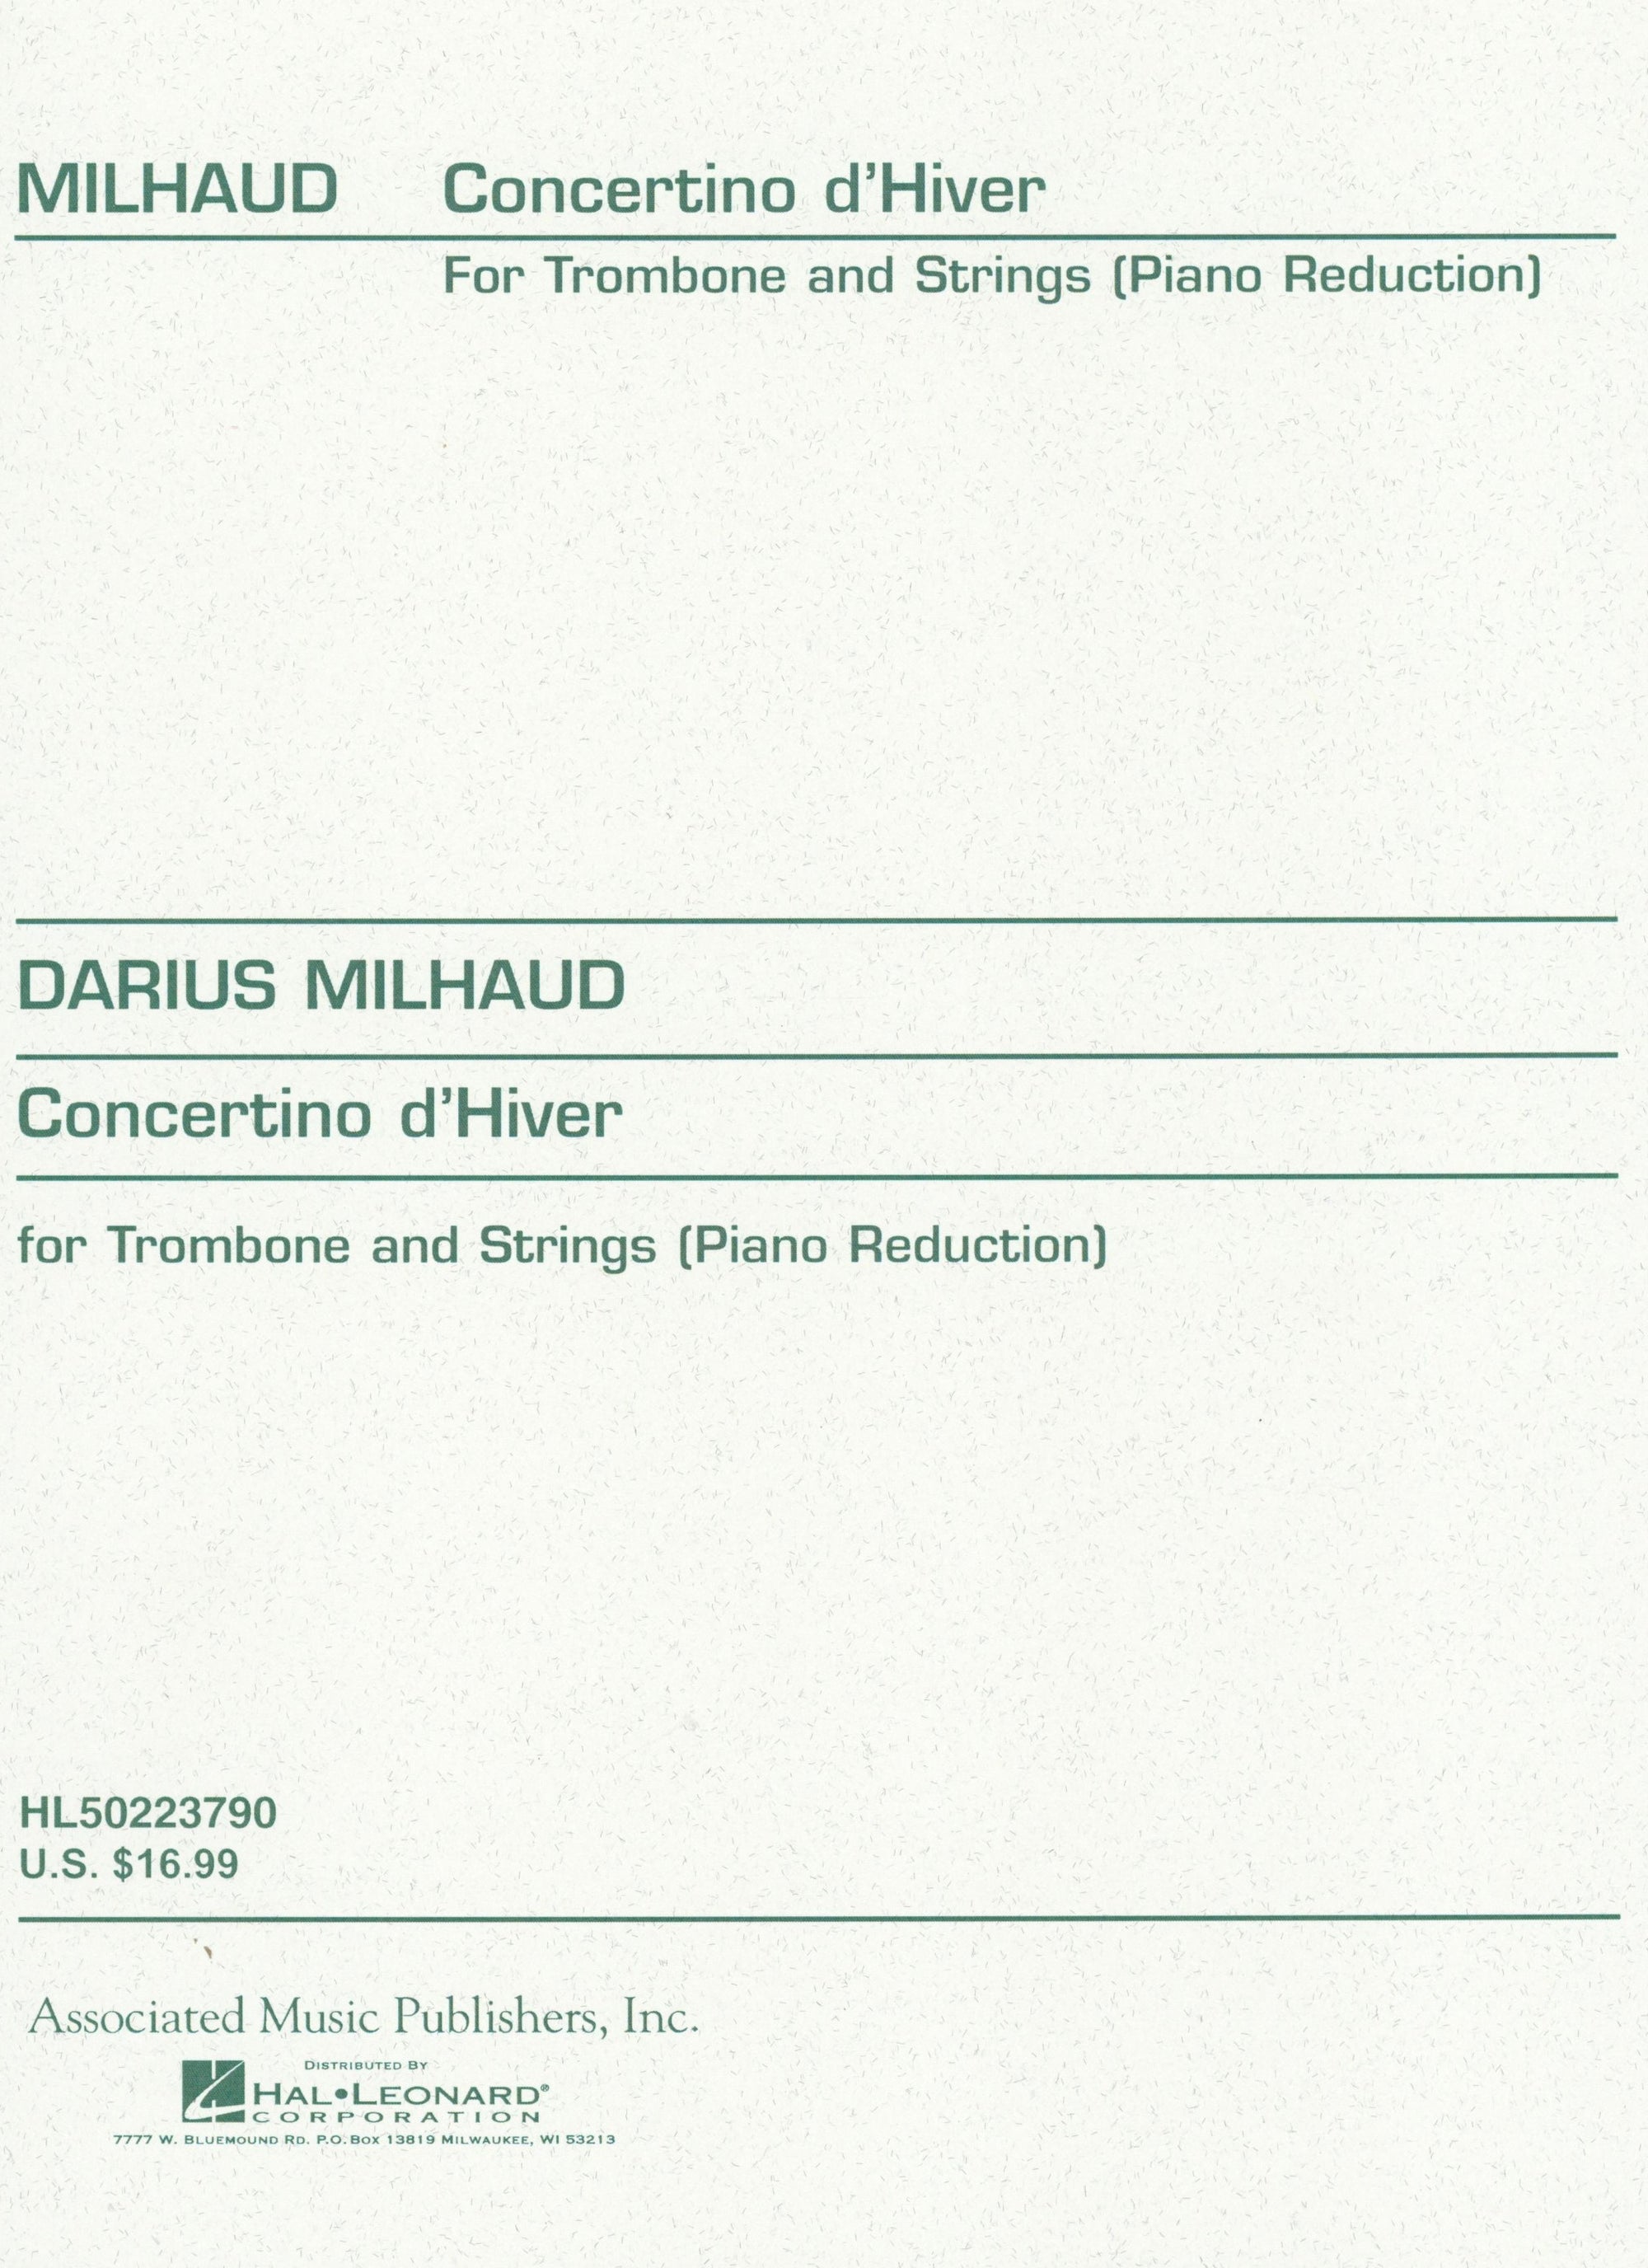 Milhaud: Concertino d'Hiver, Op. 327